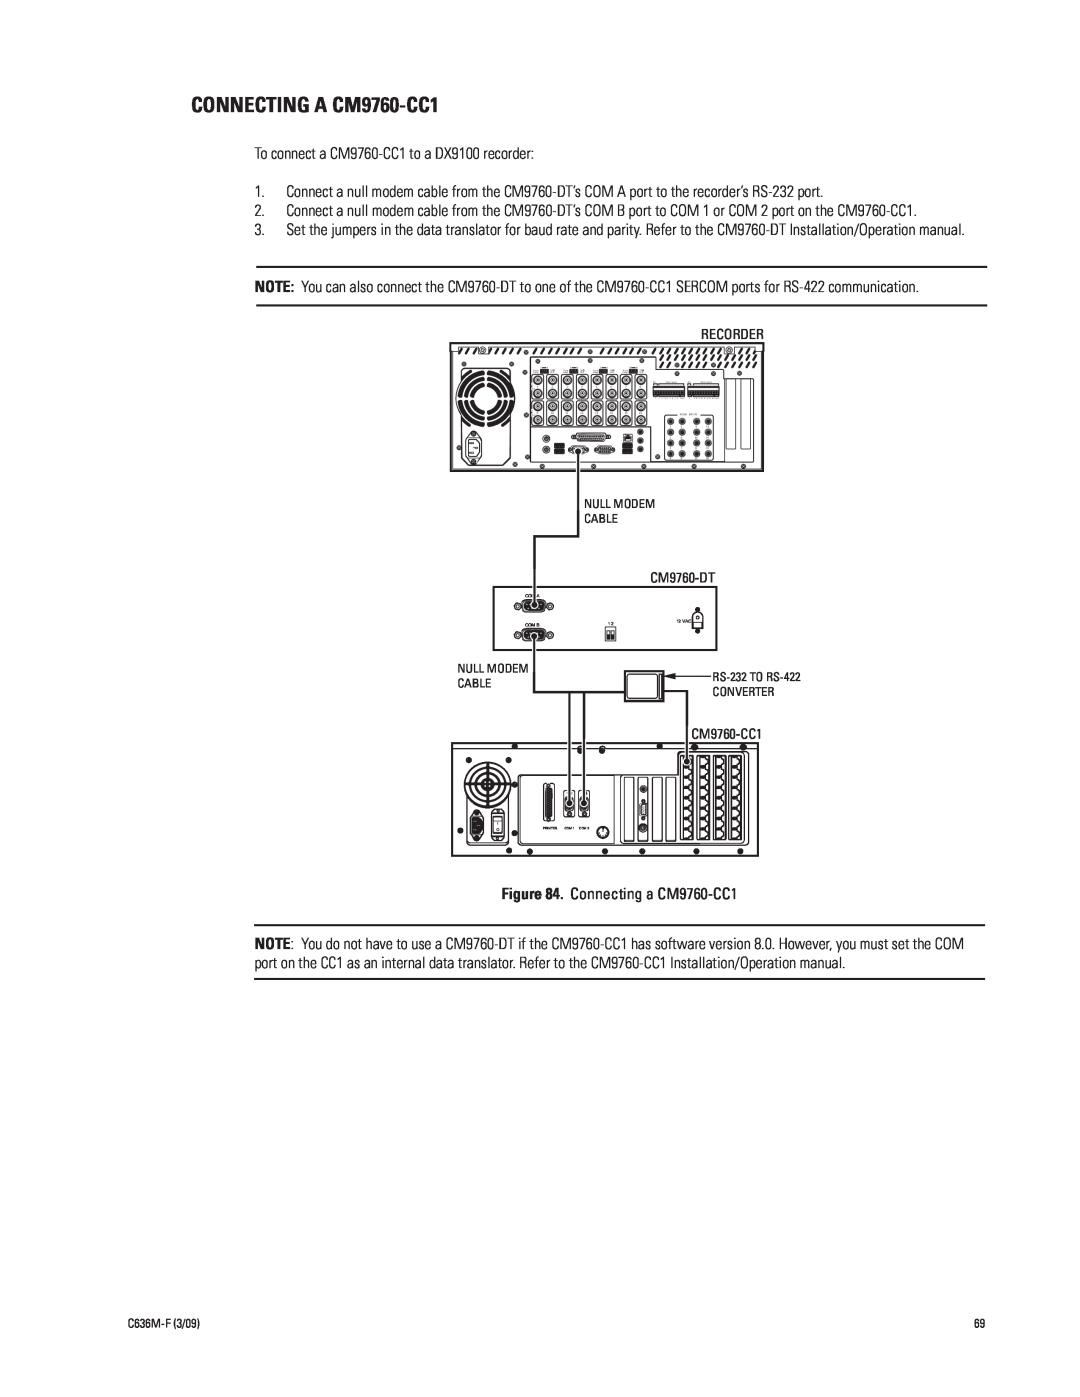 Pelco C636M-F manual CONNECTING A CM9760-CC1 